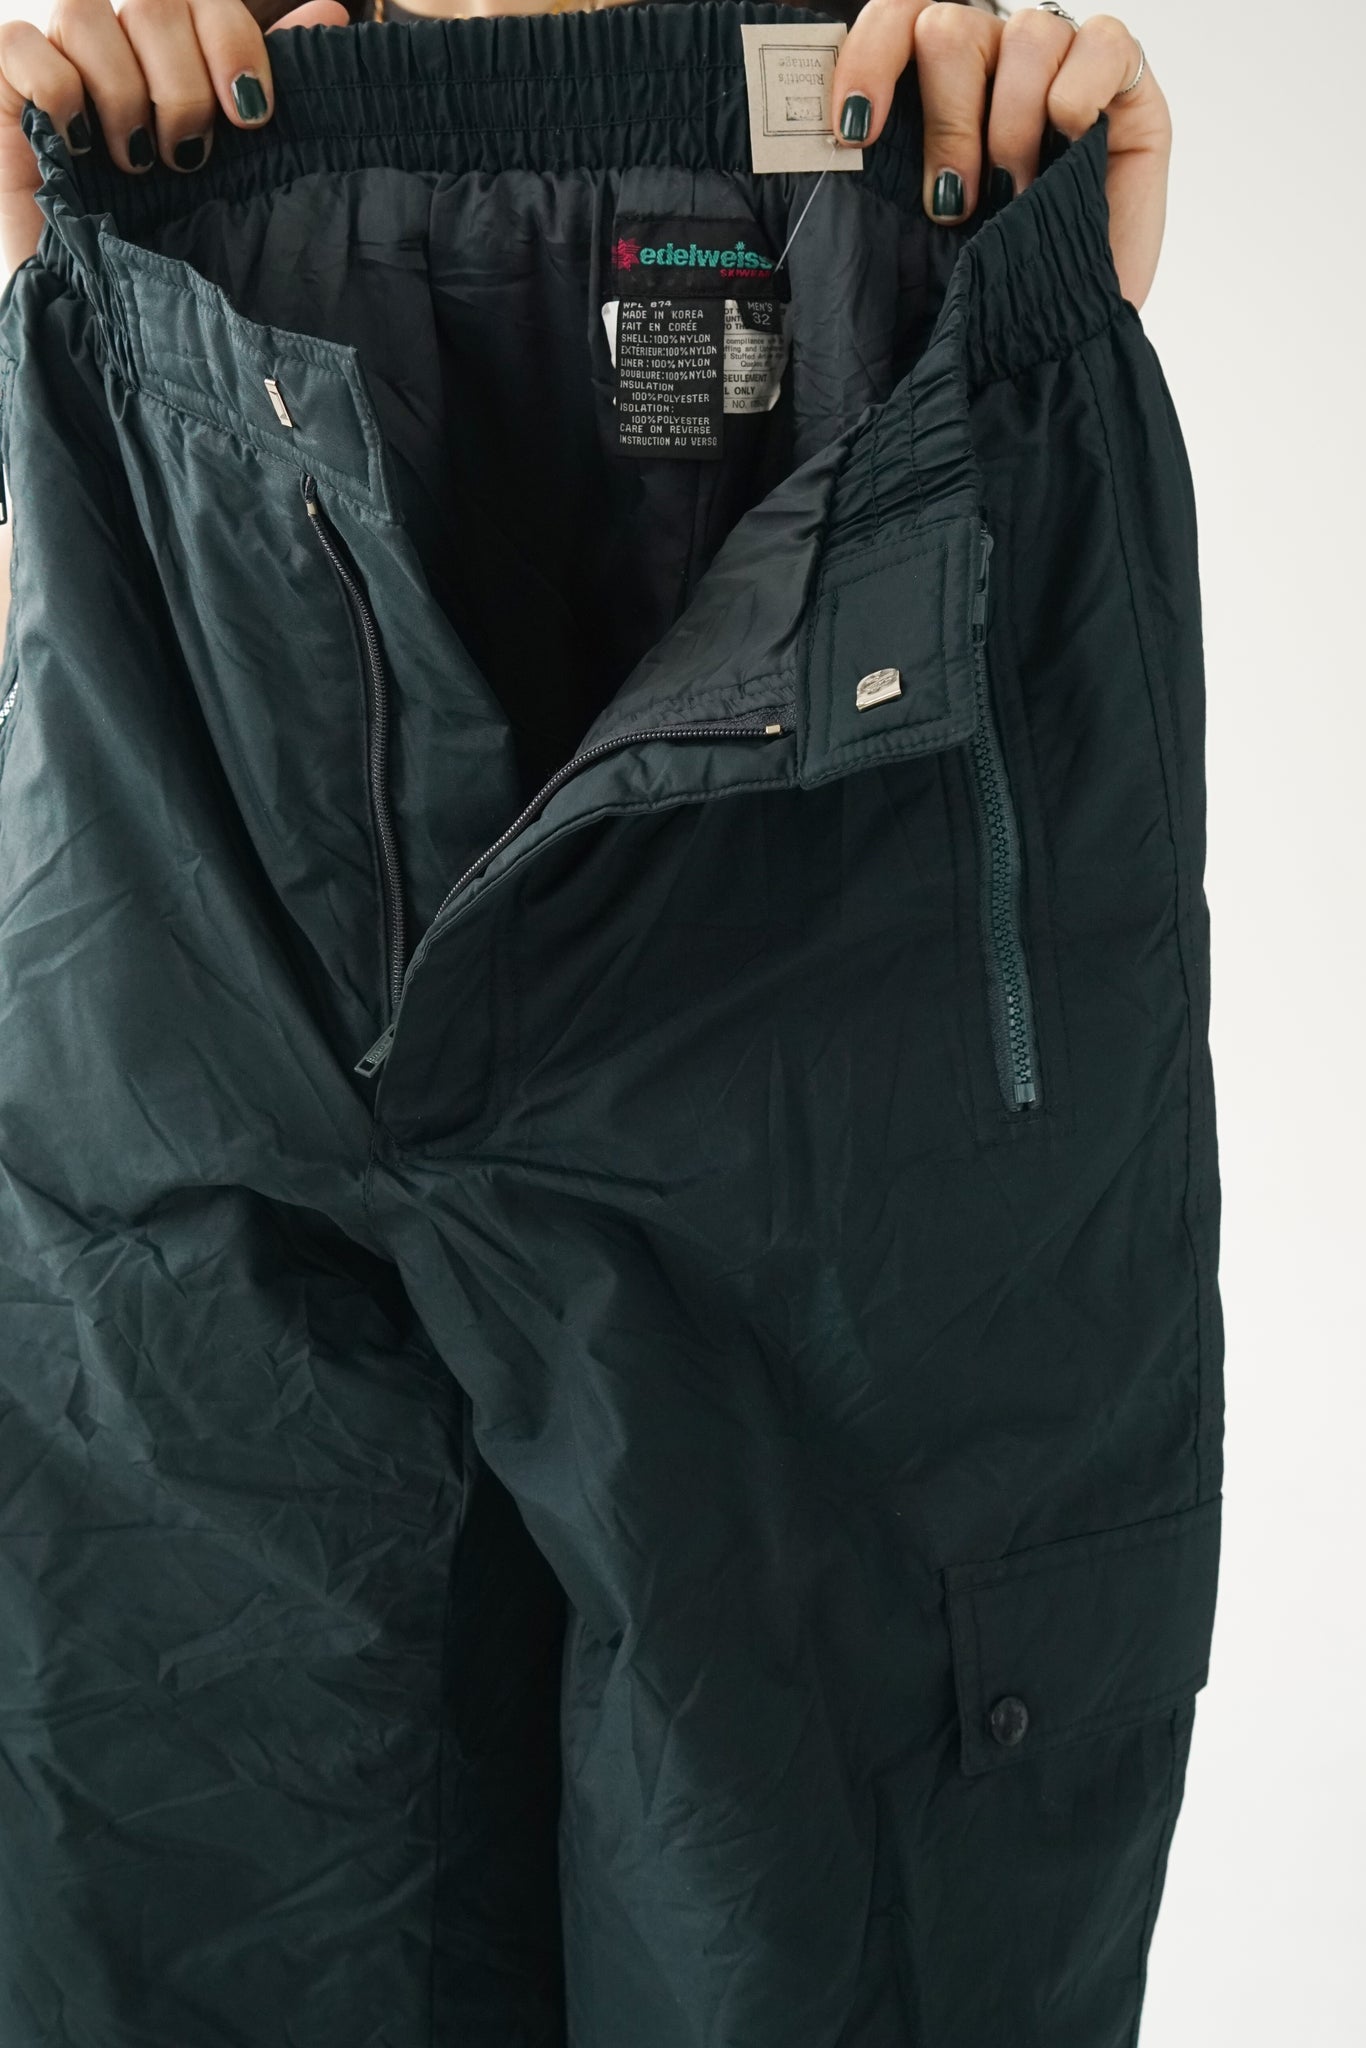 Pantalon de neige cargo Edelweiss gris/noir unisexe taille 32 (S-M